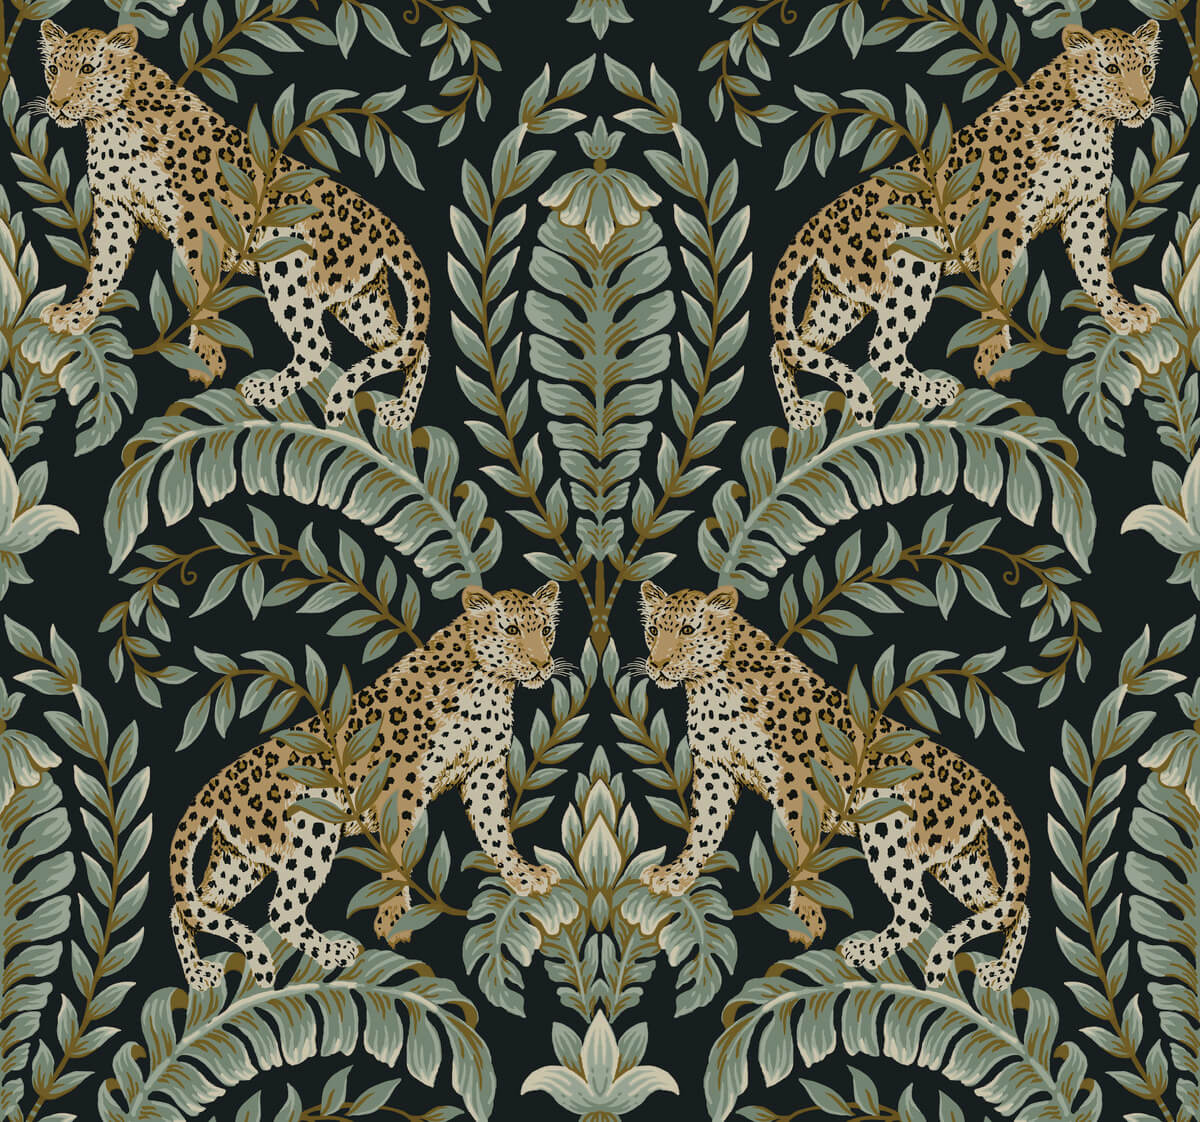 leopard wallpapers